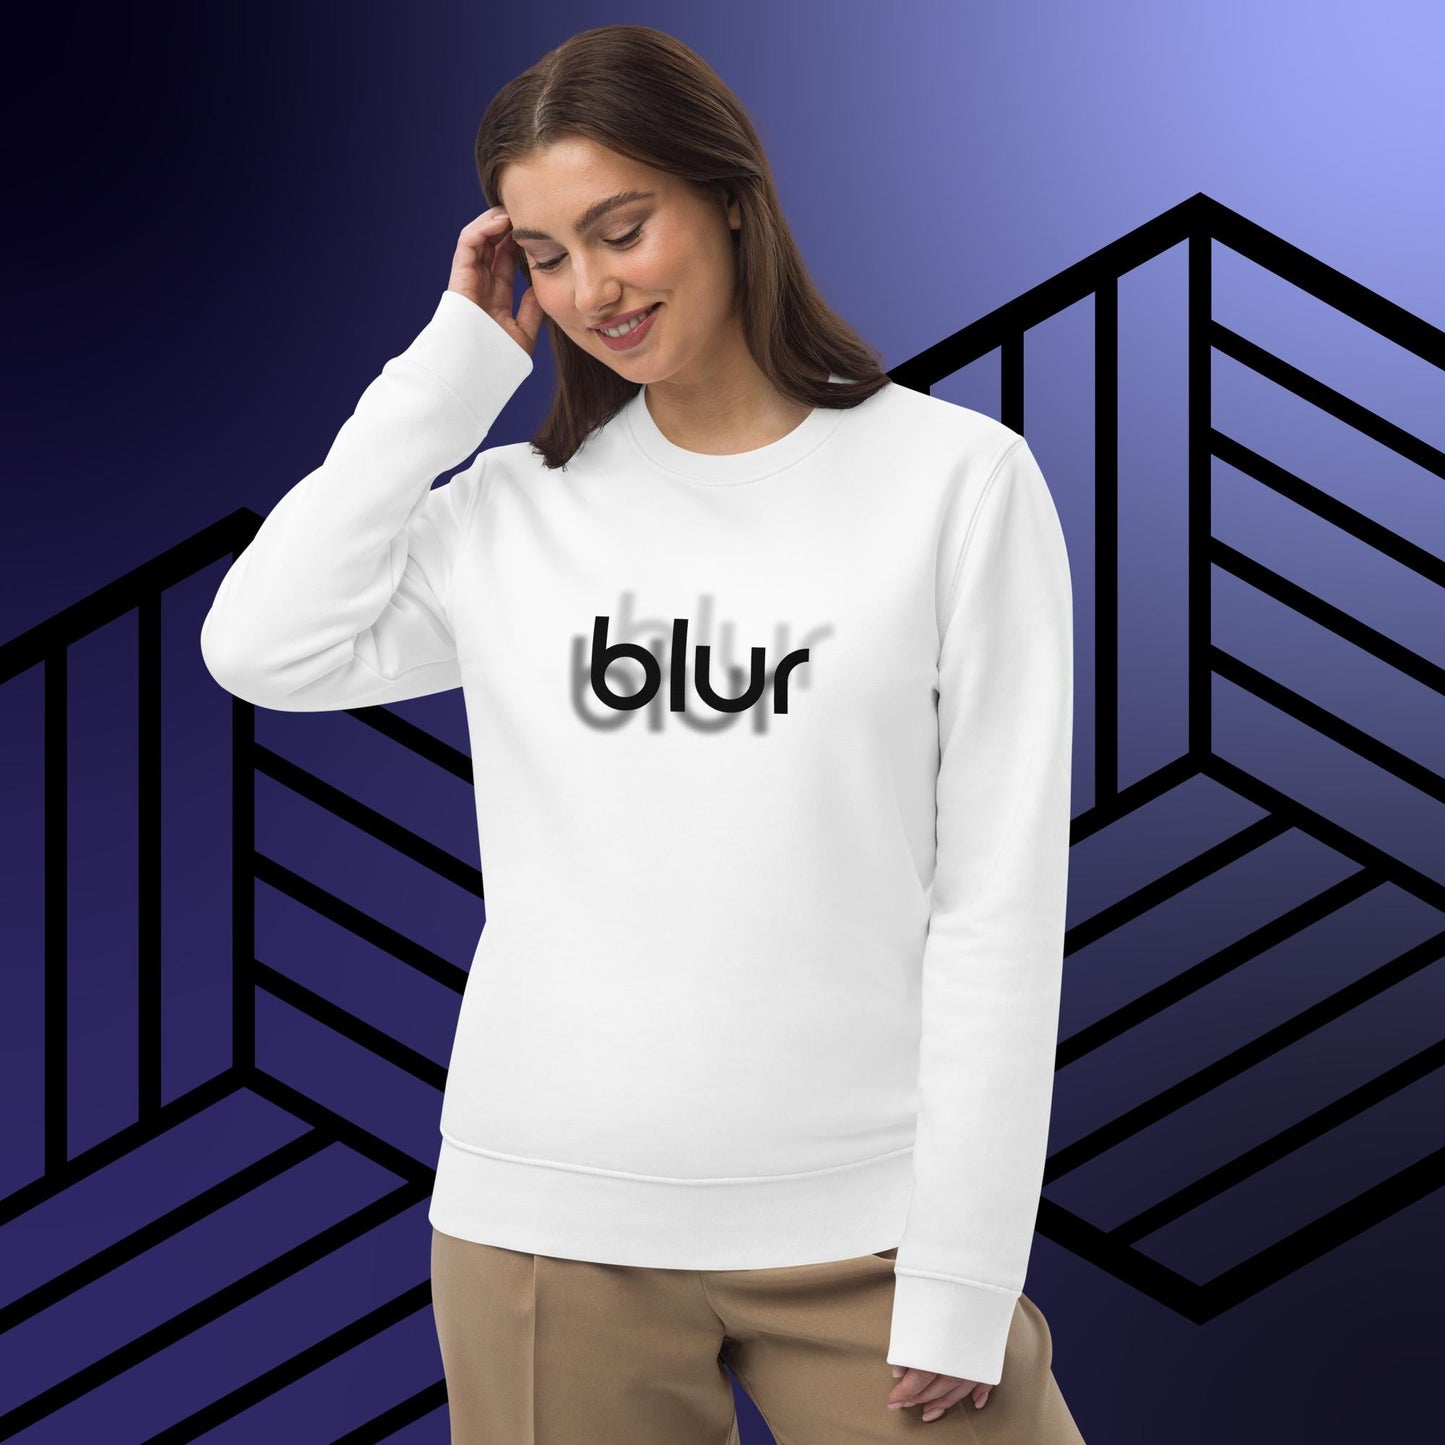 Contemporary 'Blur' Organic Cotton Sweatshirt - Blur Sweatshirt